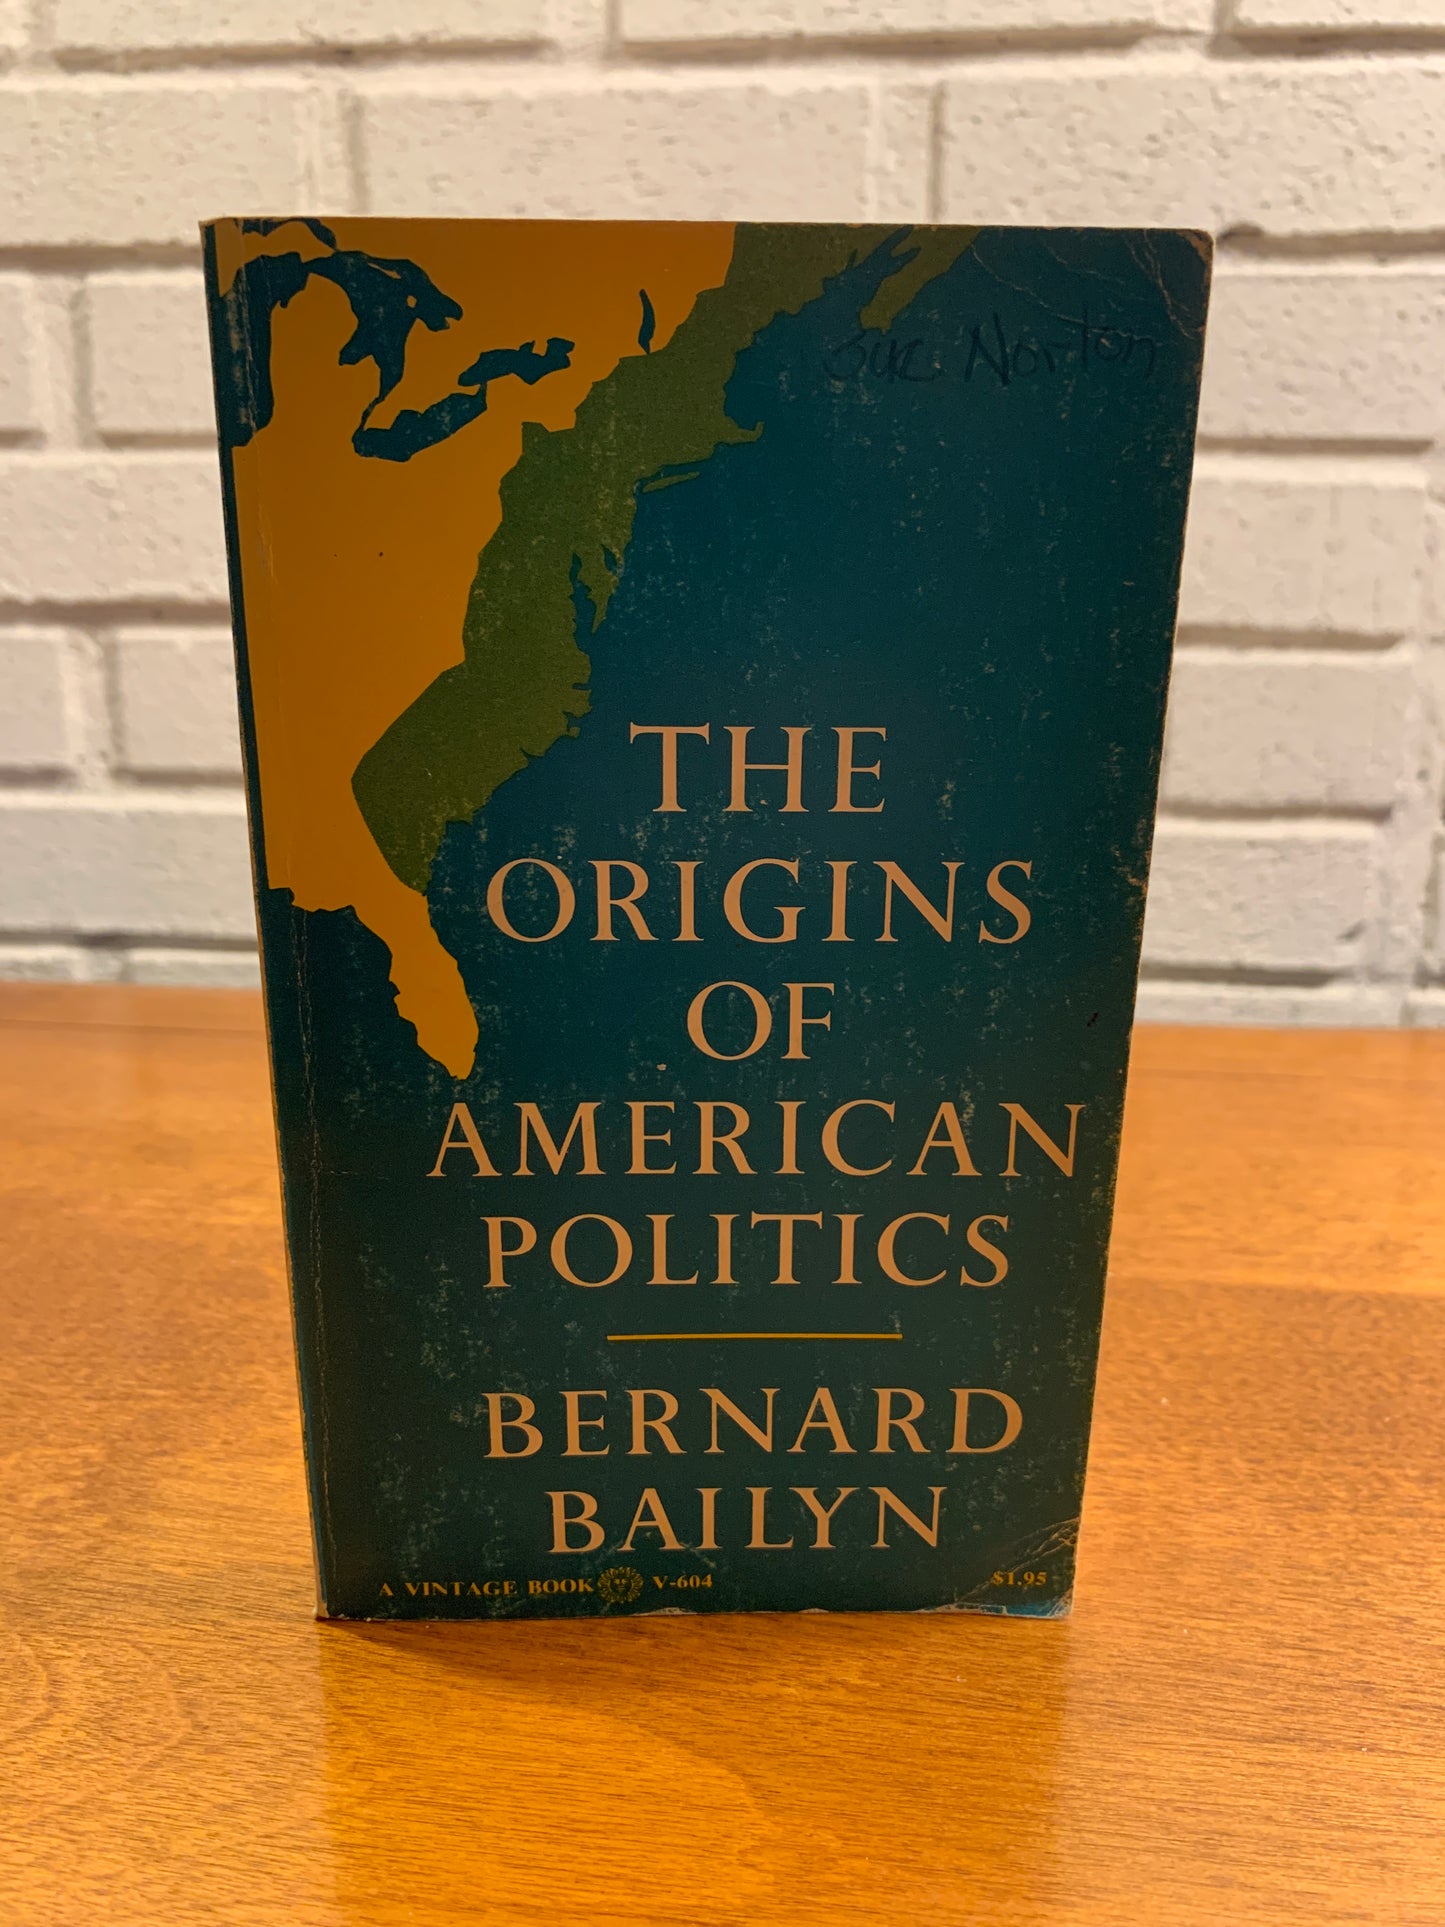 The Origins of American Politics by Bernard Bailyn